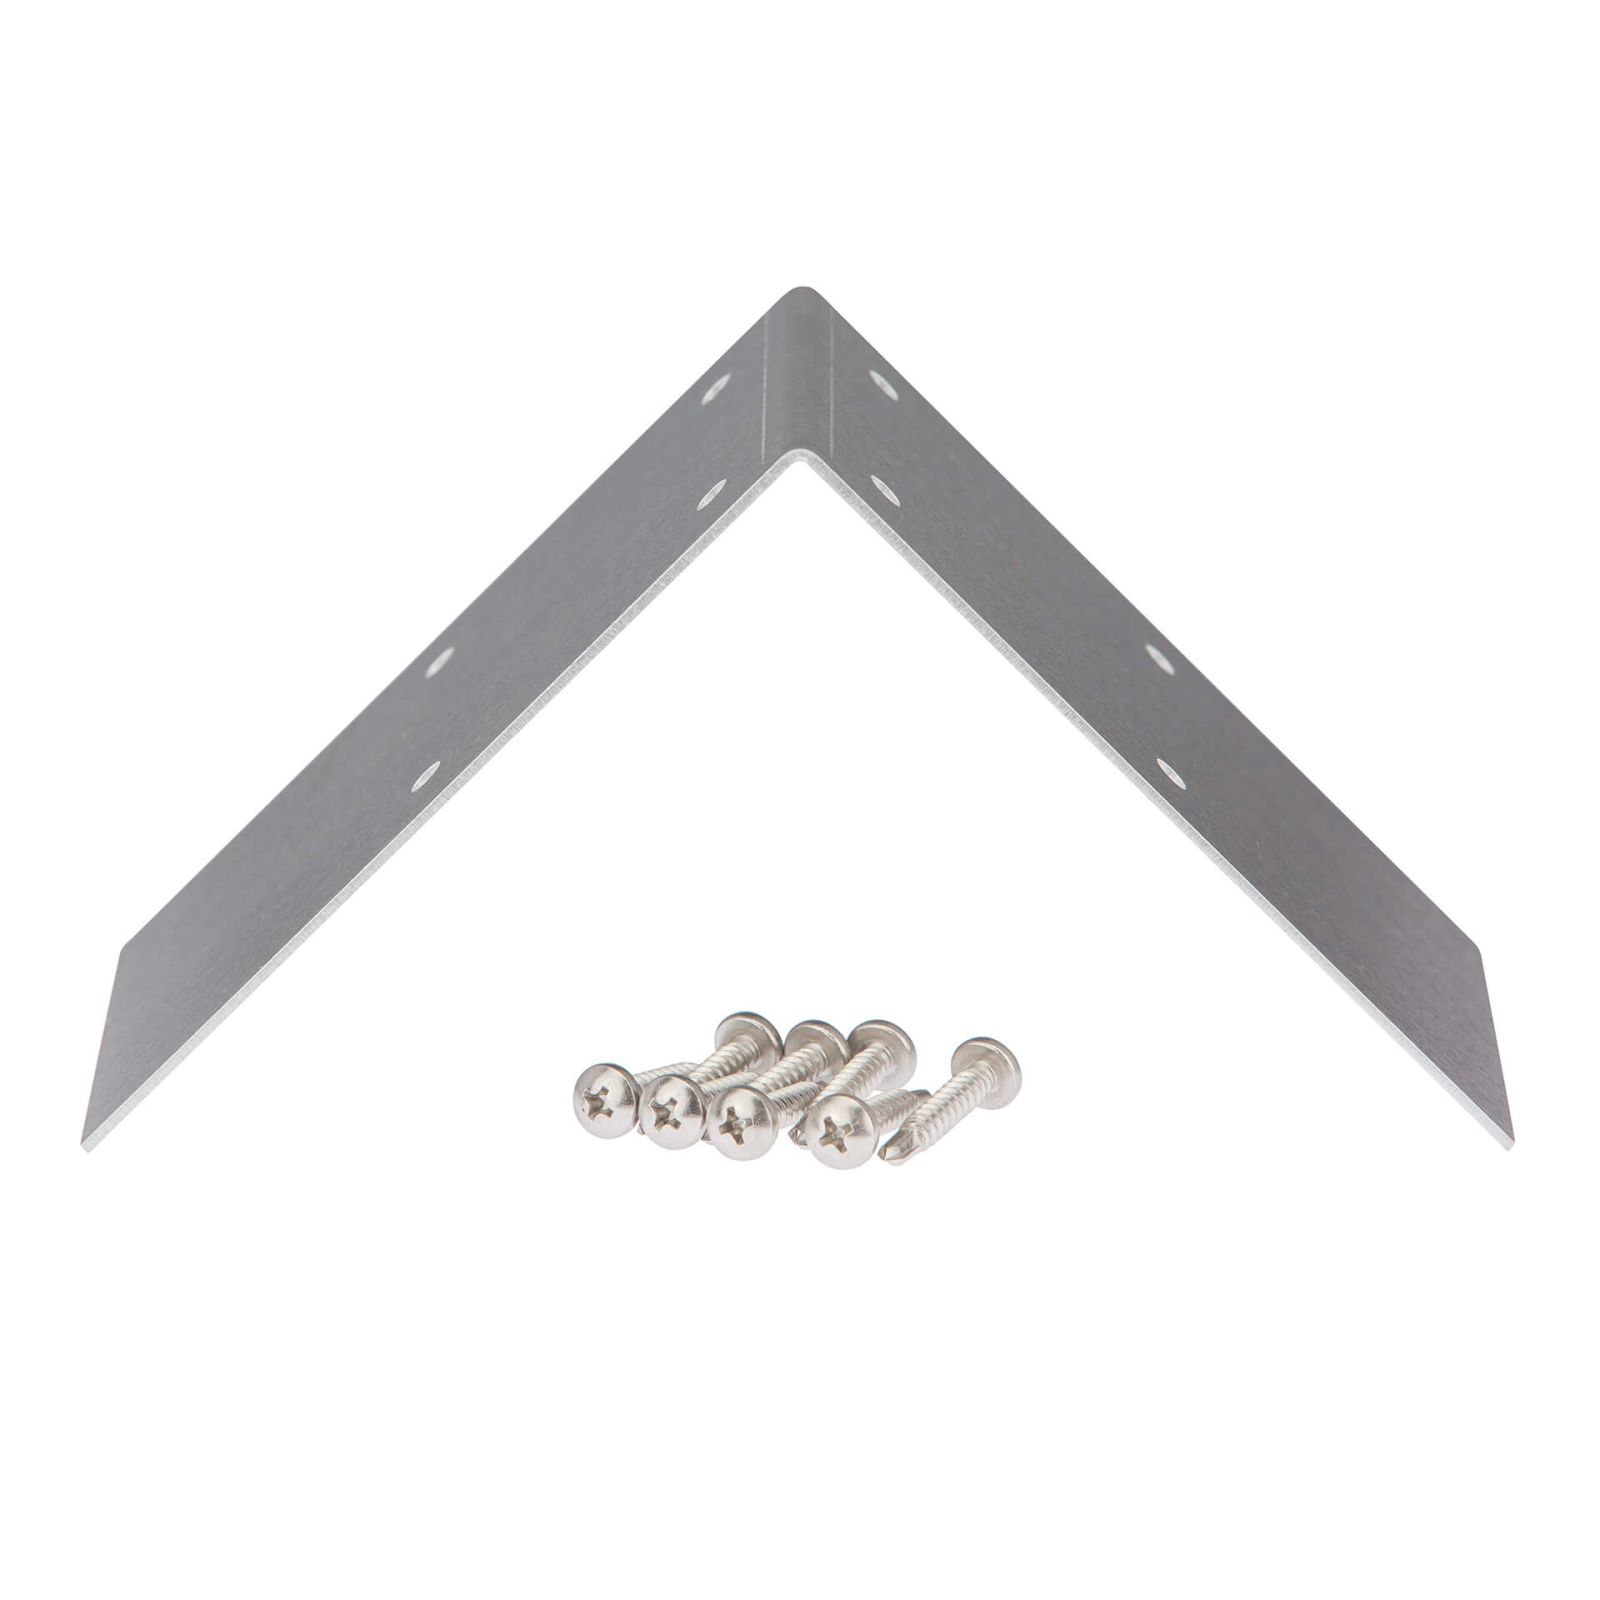 Firstprofilverbinder | Aluminium | Blank